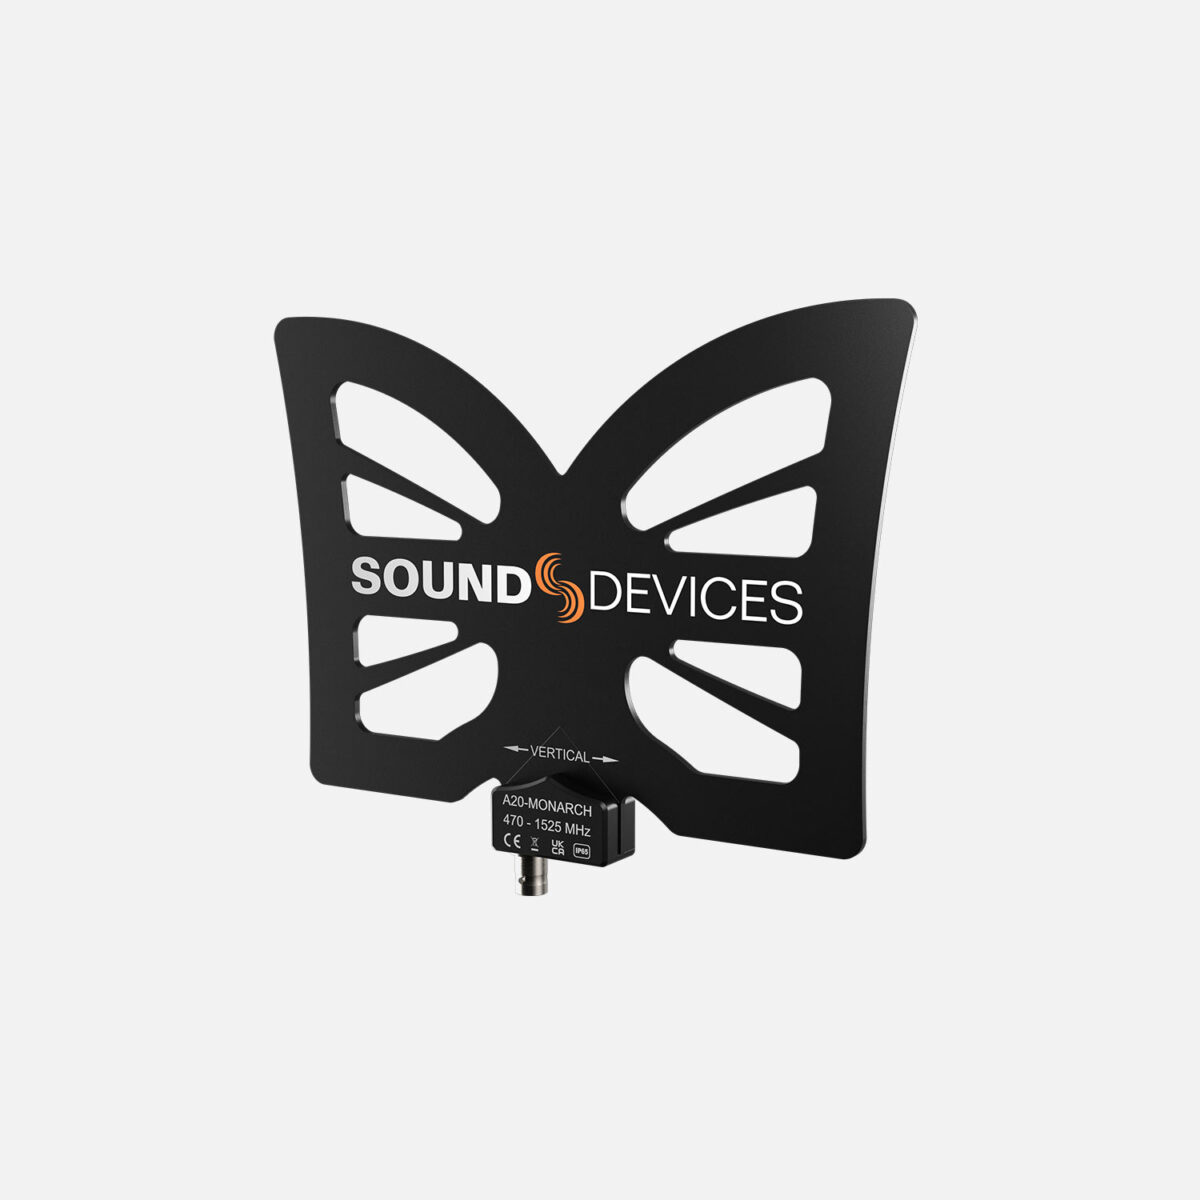 Sound Devices A20-Monarch